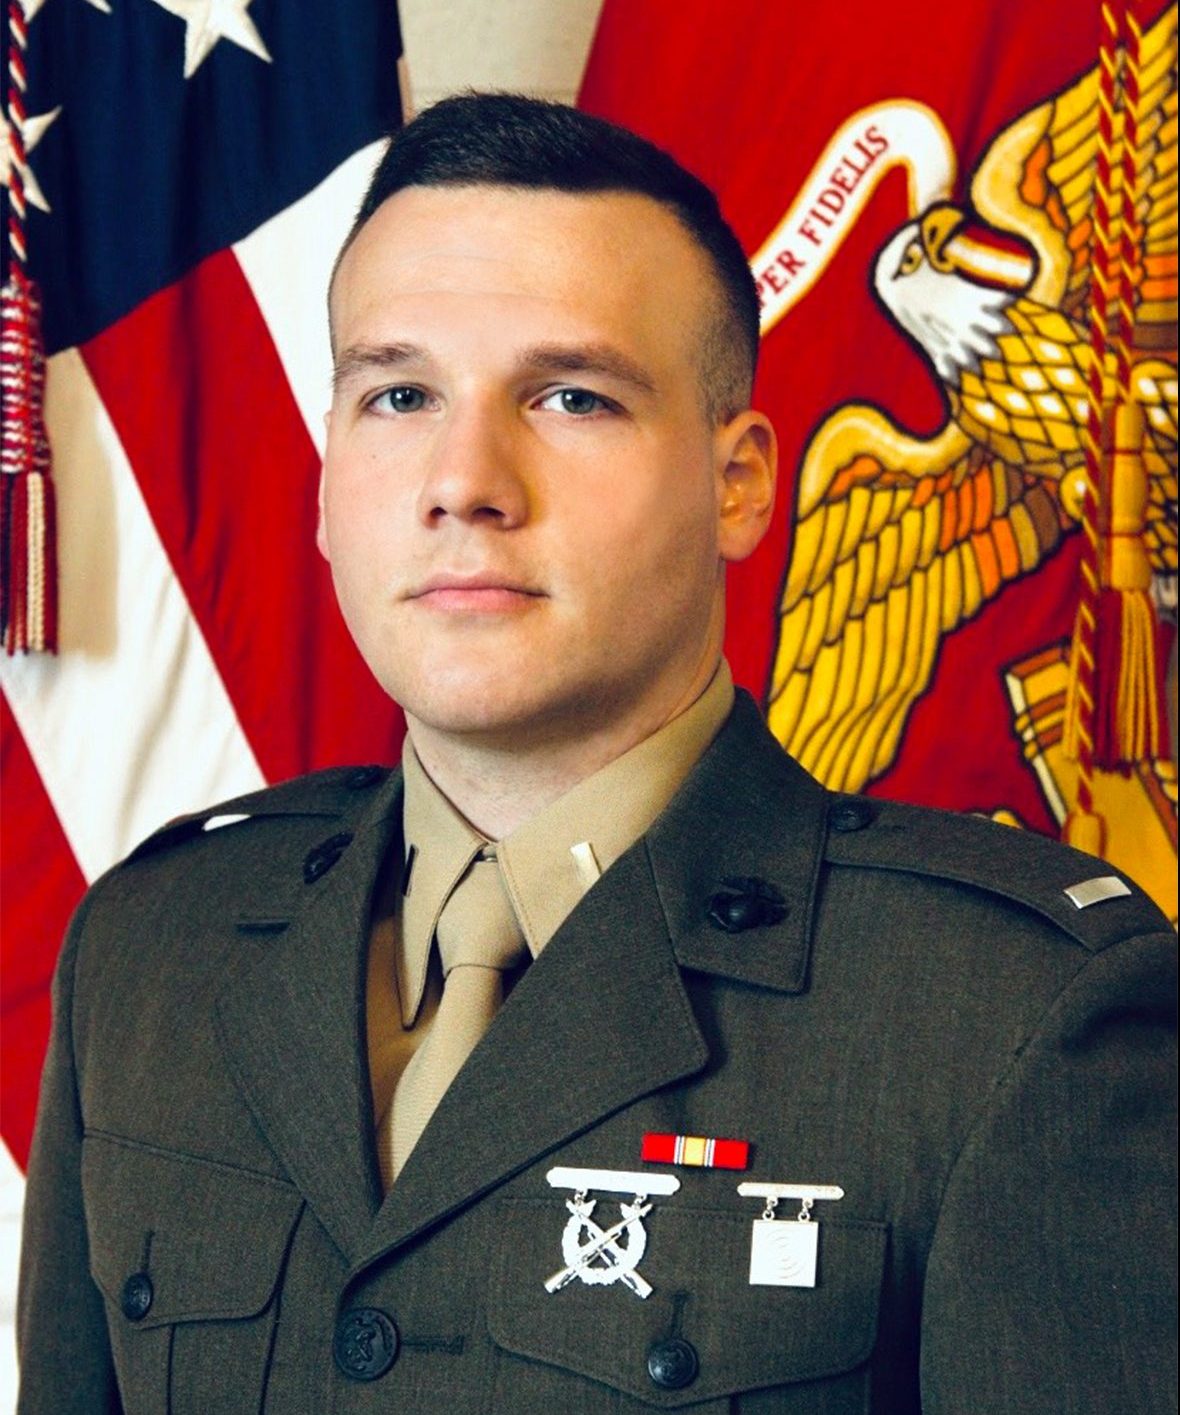 Headshot of a man in military regalia